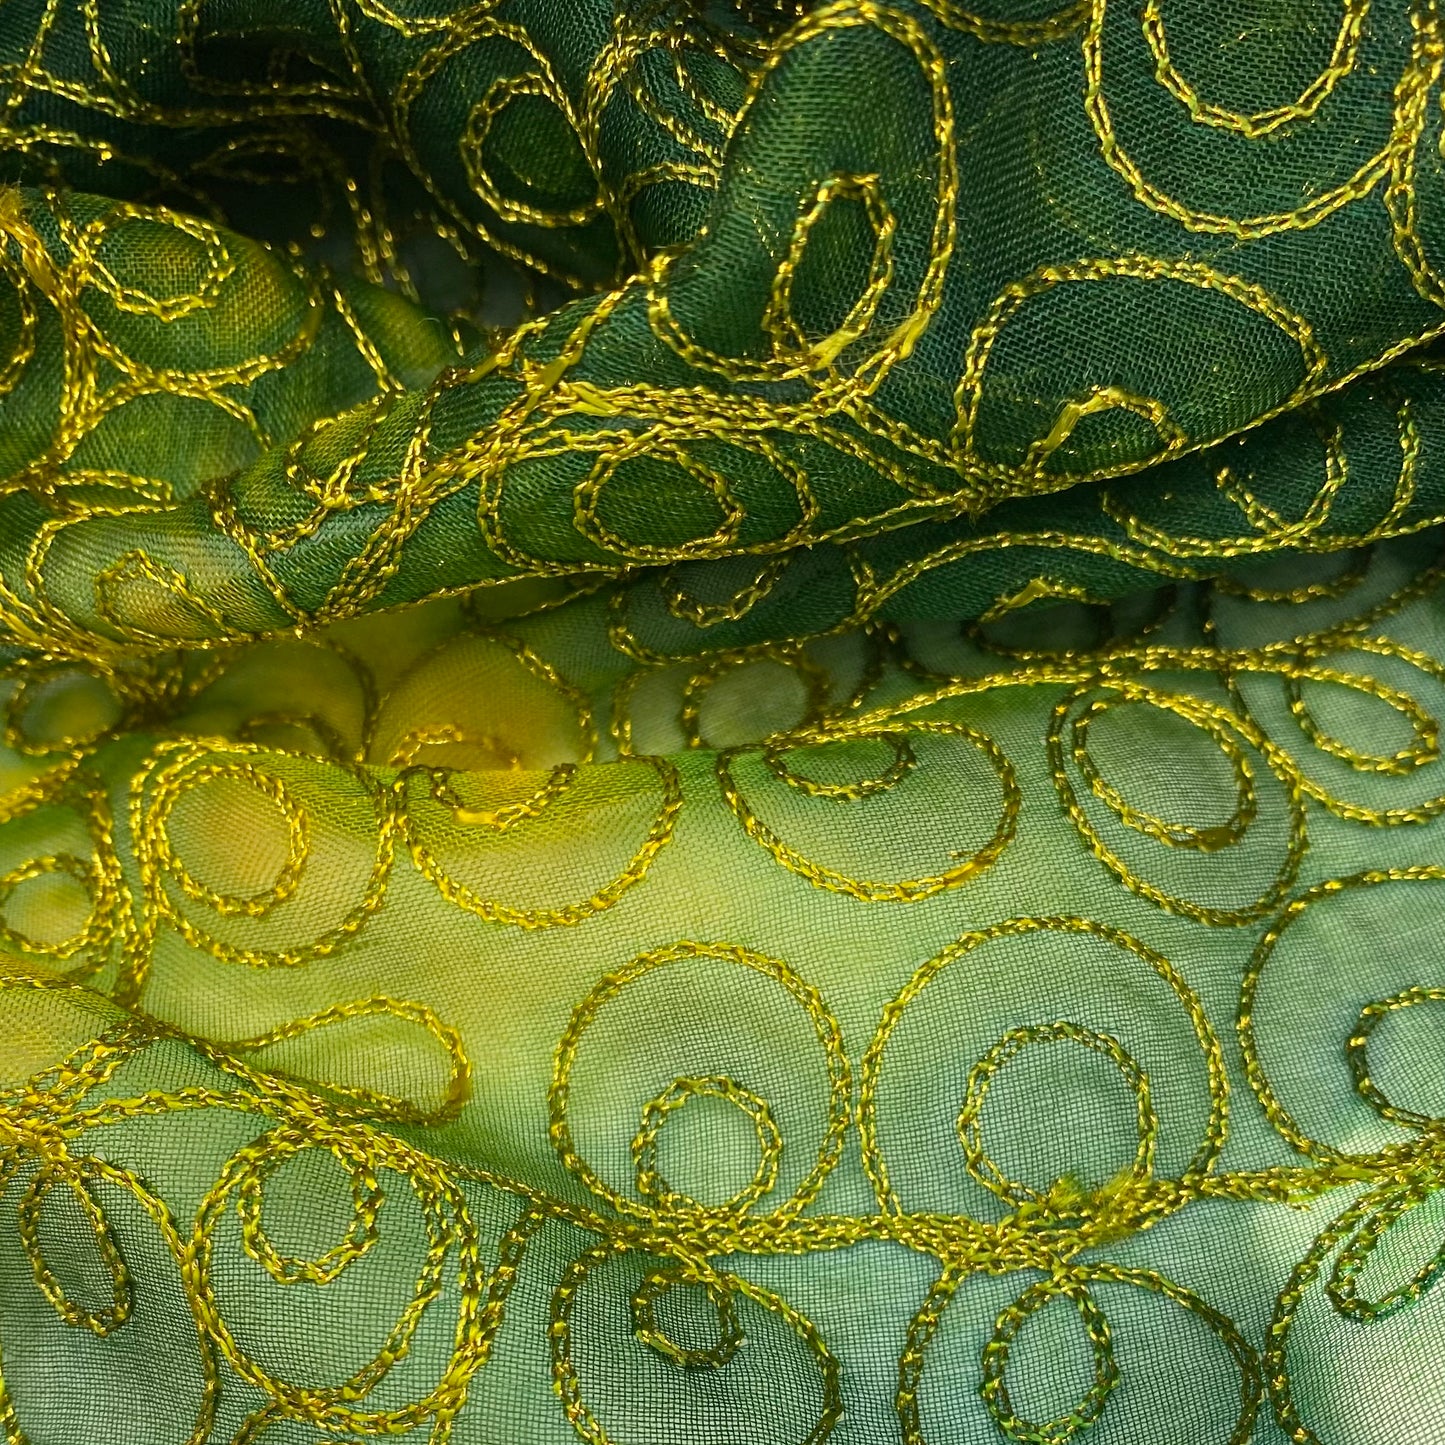 Embroidered Silk Organza - 44” - Green/Yellow